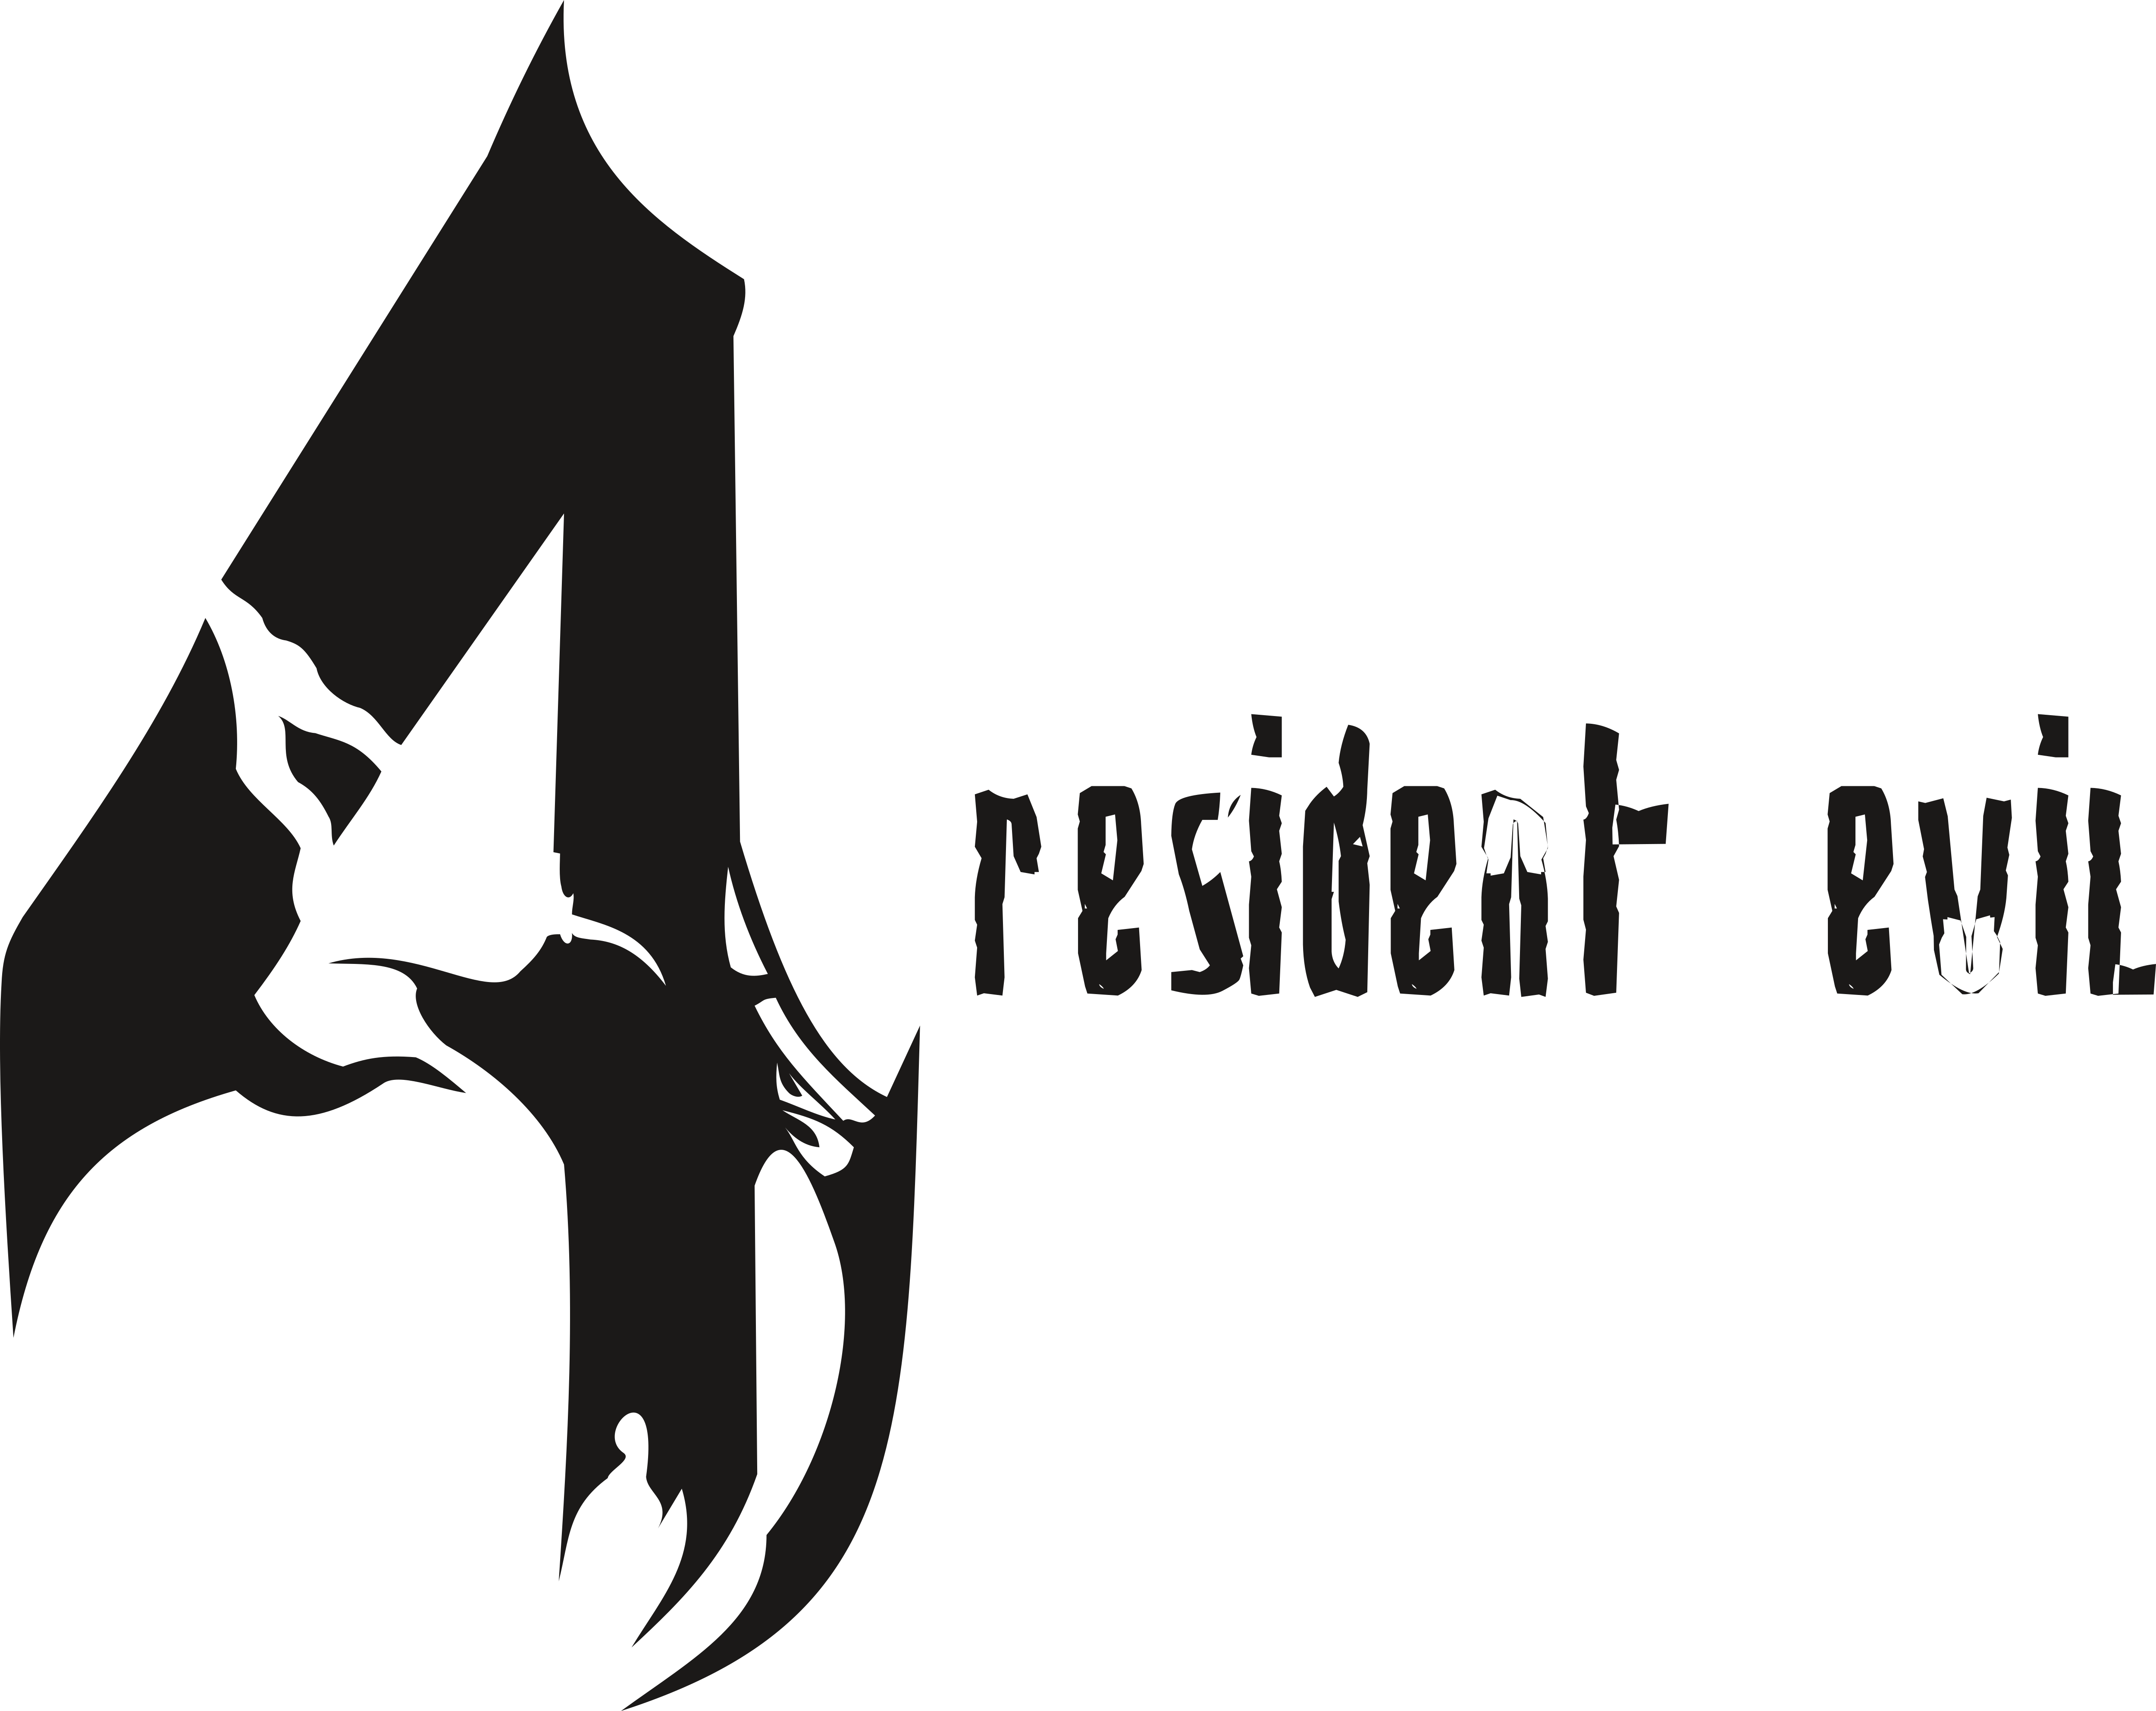 Resident Evil 4 Logo PNG HD Quality